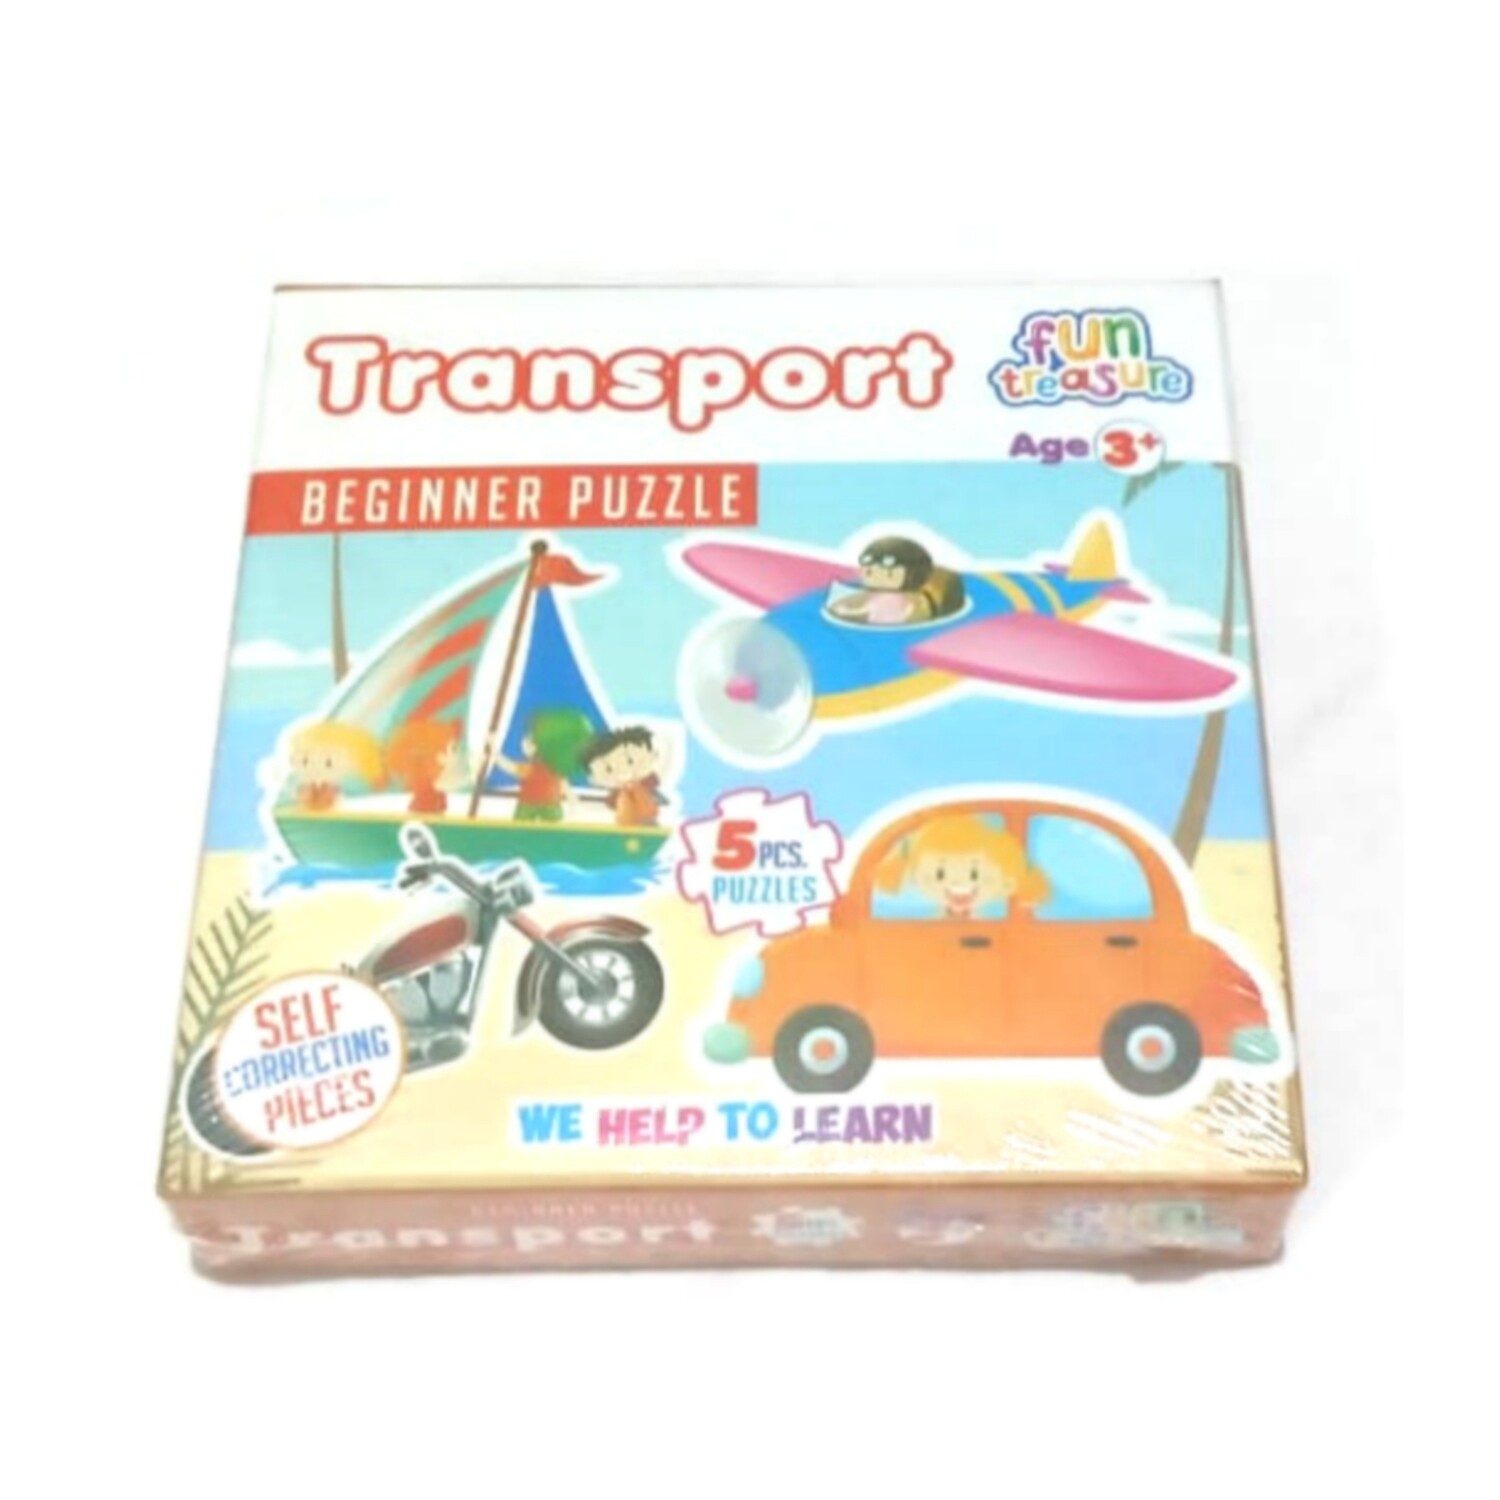 Fun Treasure Beginner Puzzle - Transport For Age 3+